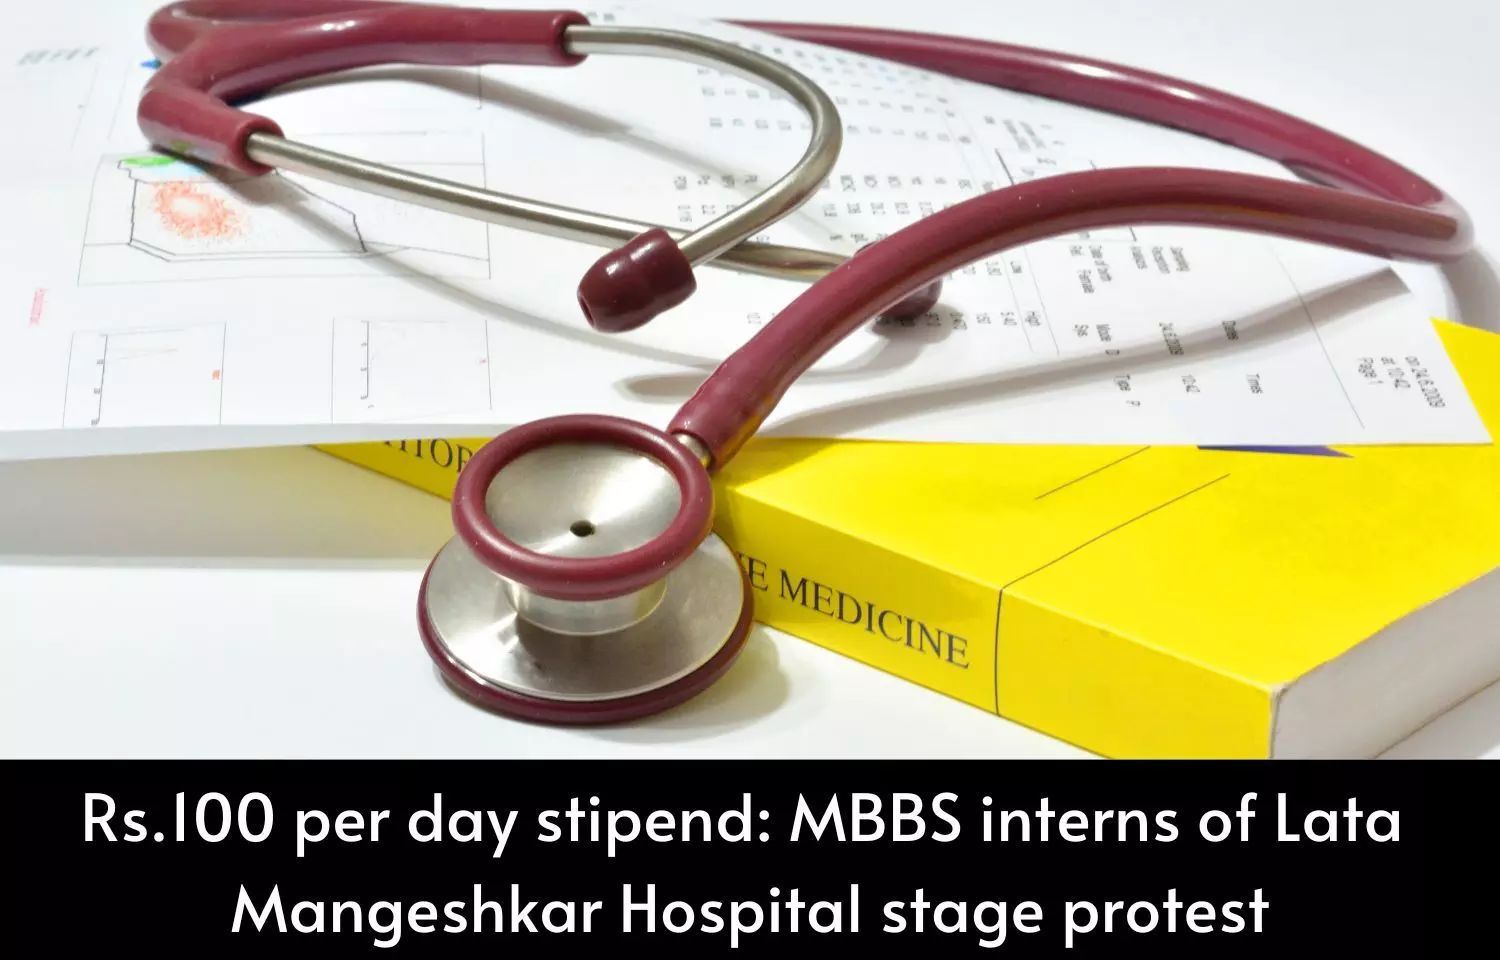 MBBS interns of Lata Mangeshkar Hospital stage protest